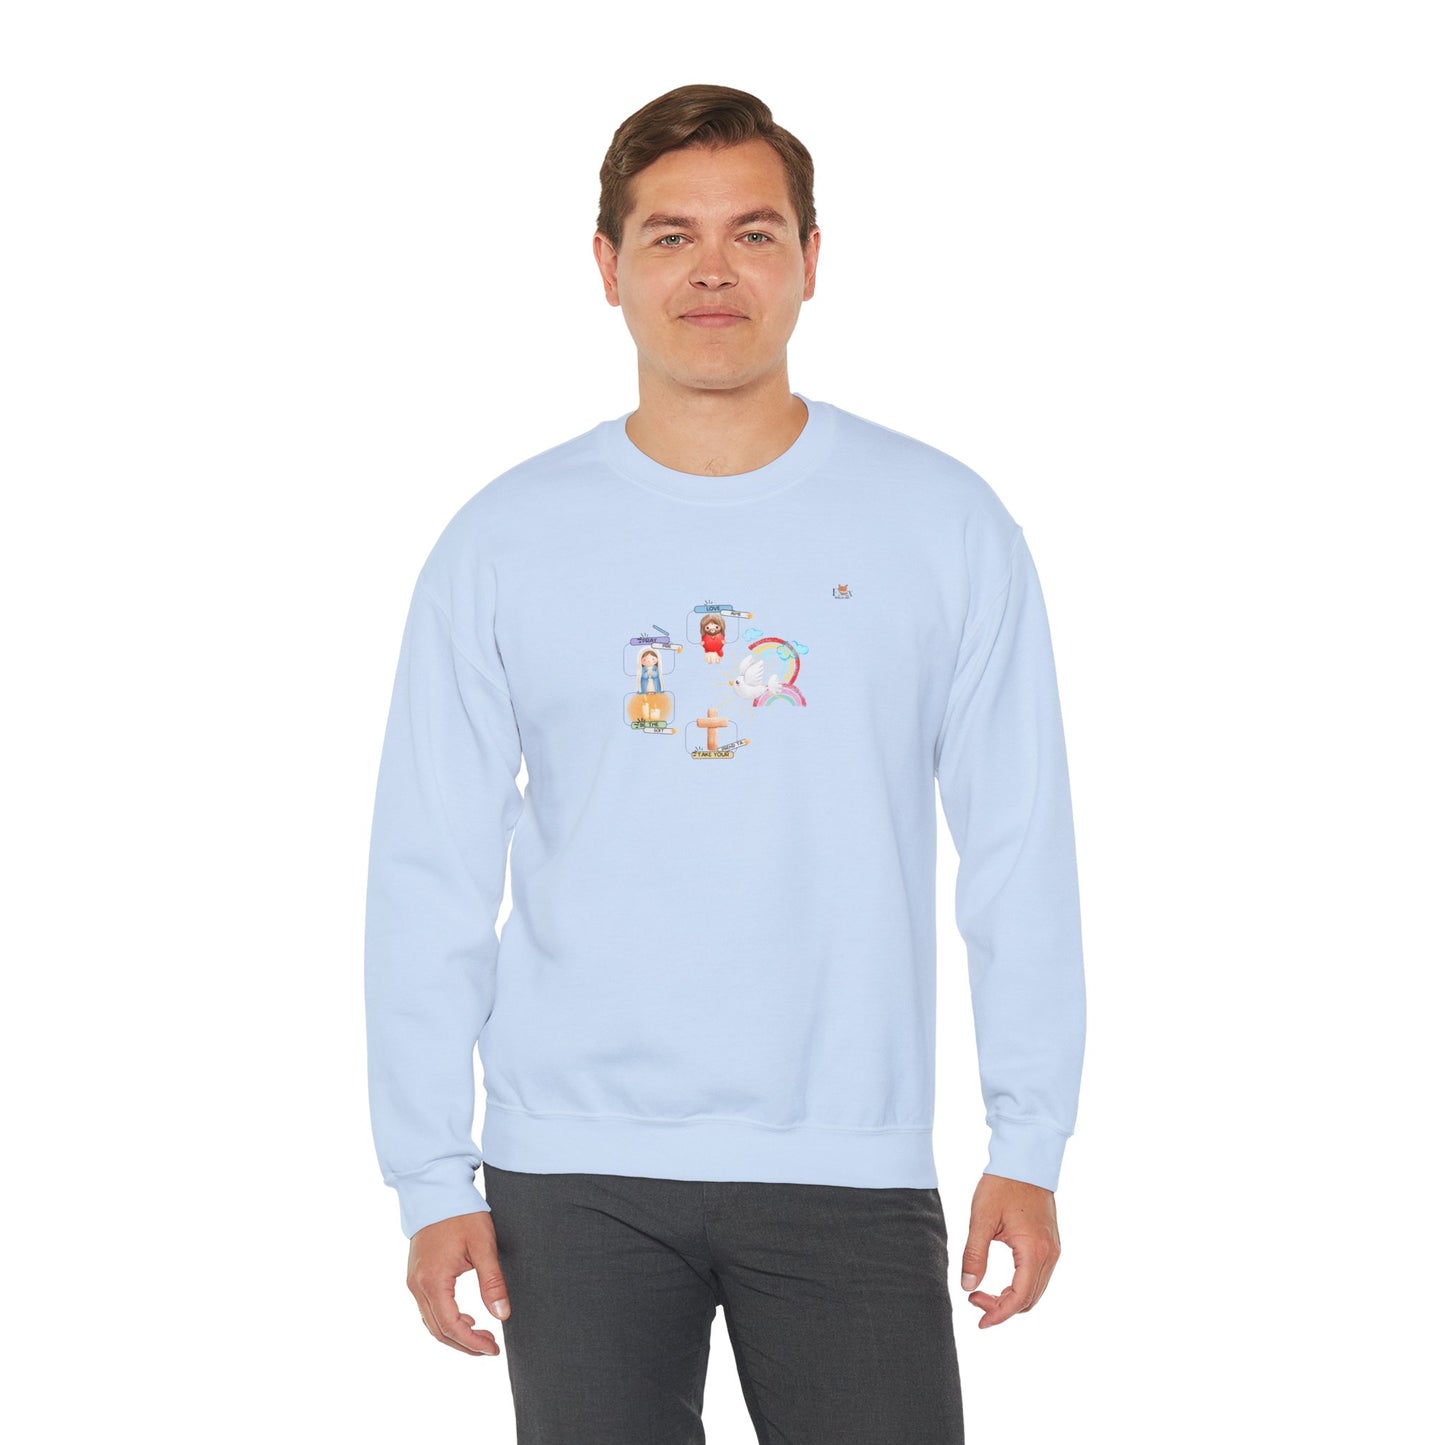 Christian Behavior [Dove]-Bilingual [Eng-Fr]- Unisex Crewneck Sweatshirt